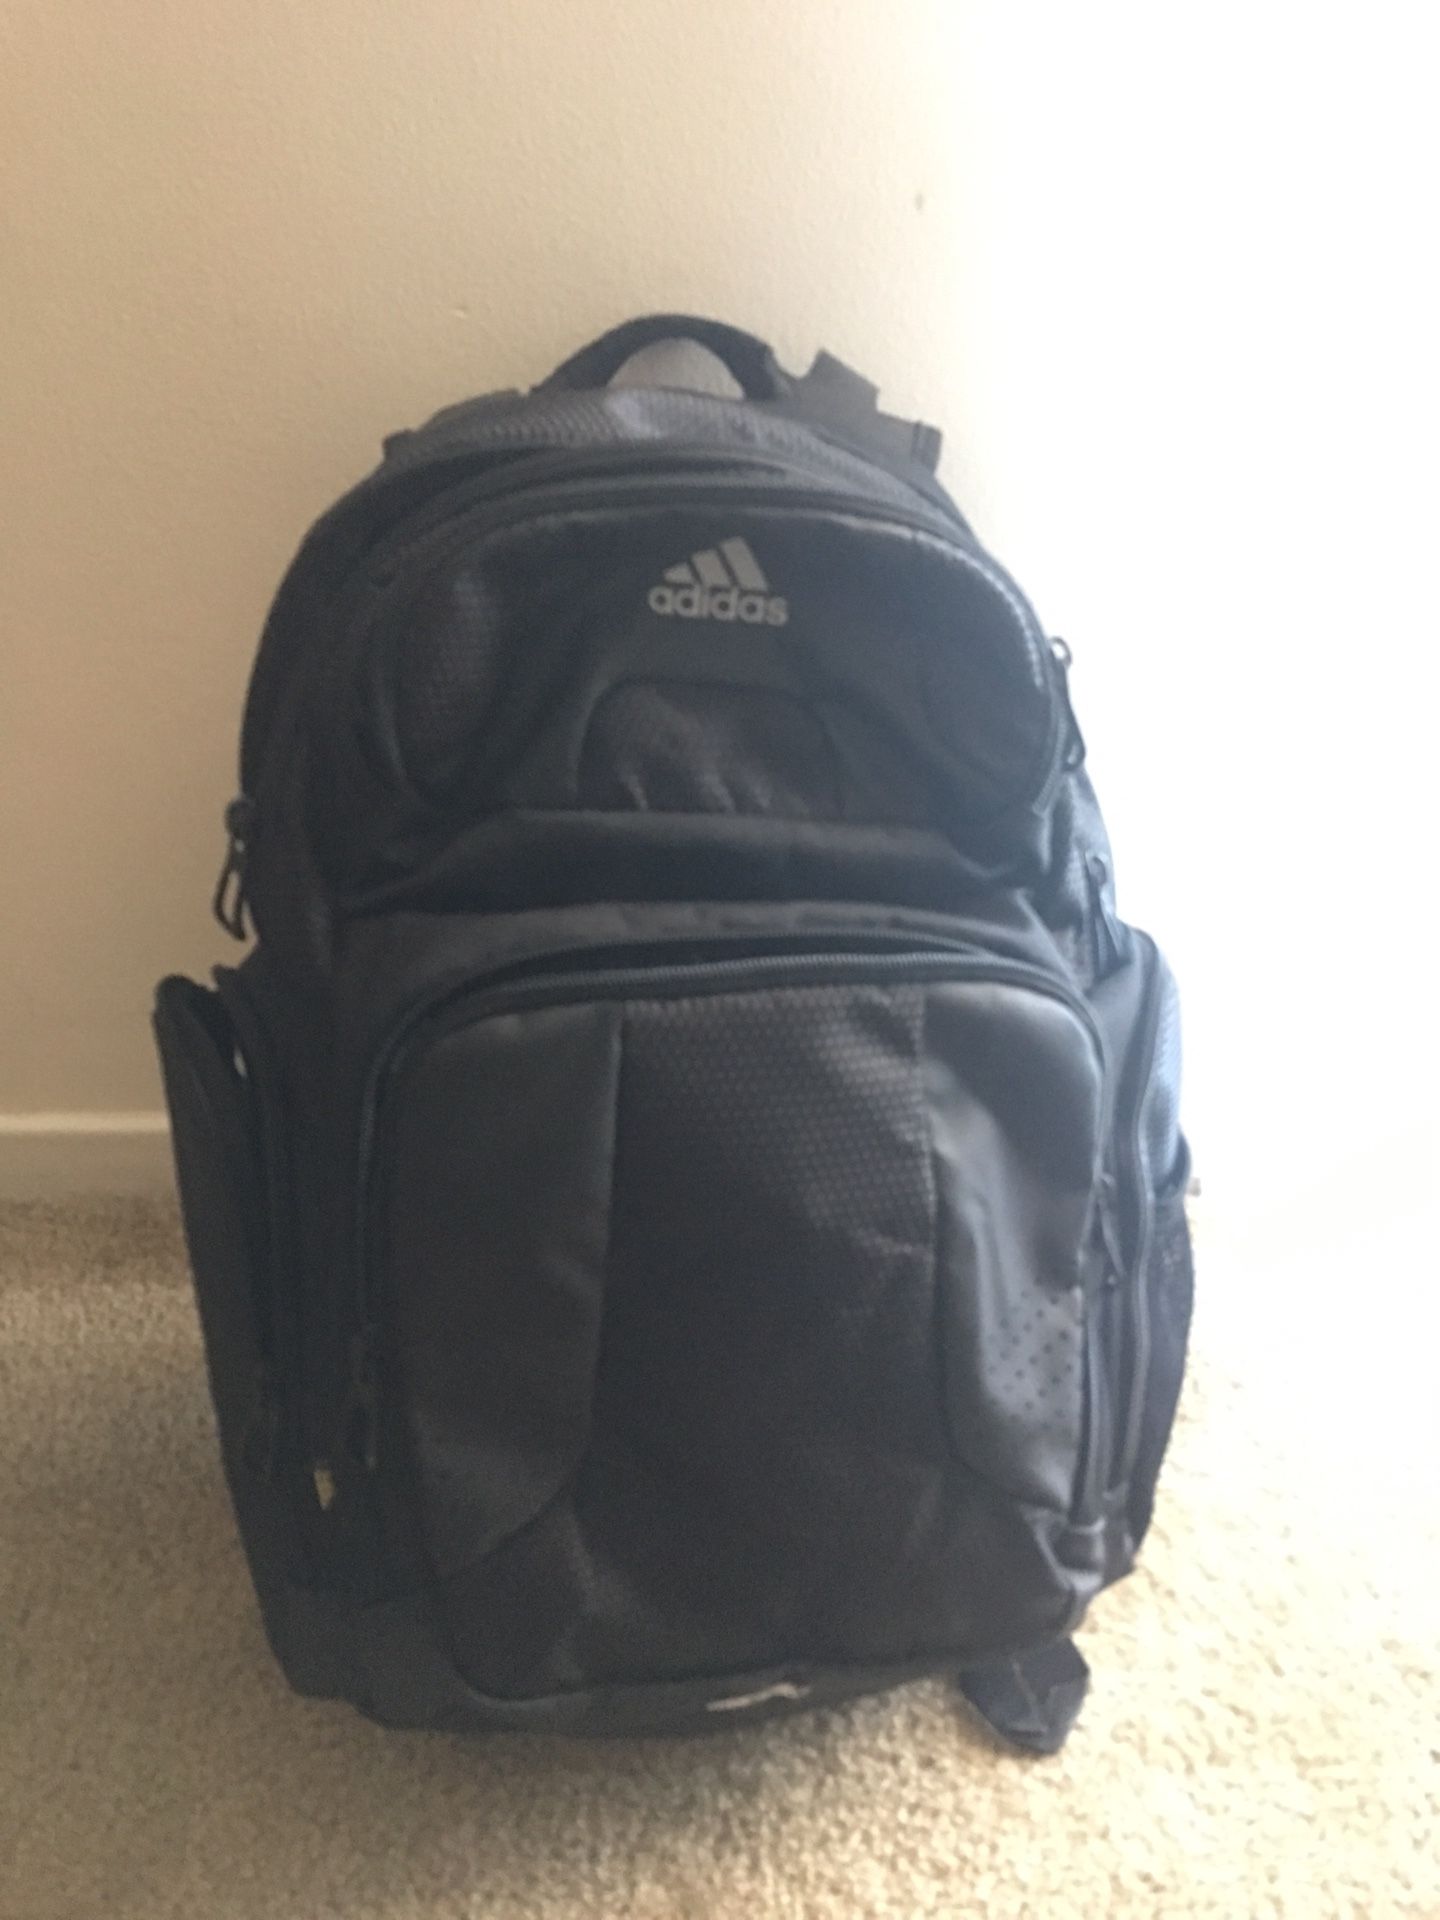 Adidas Backpack.